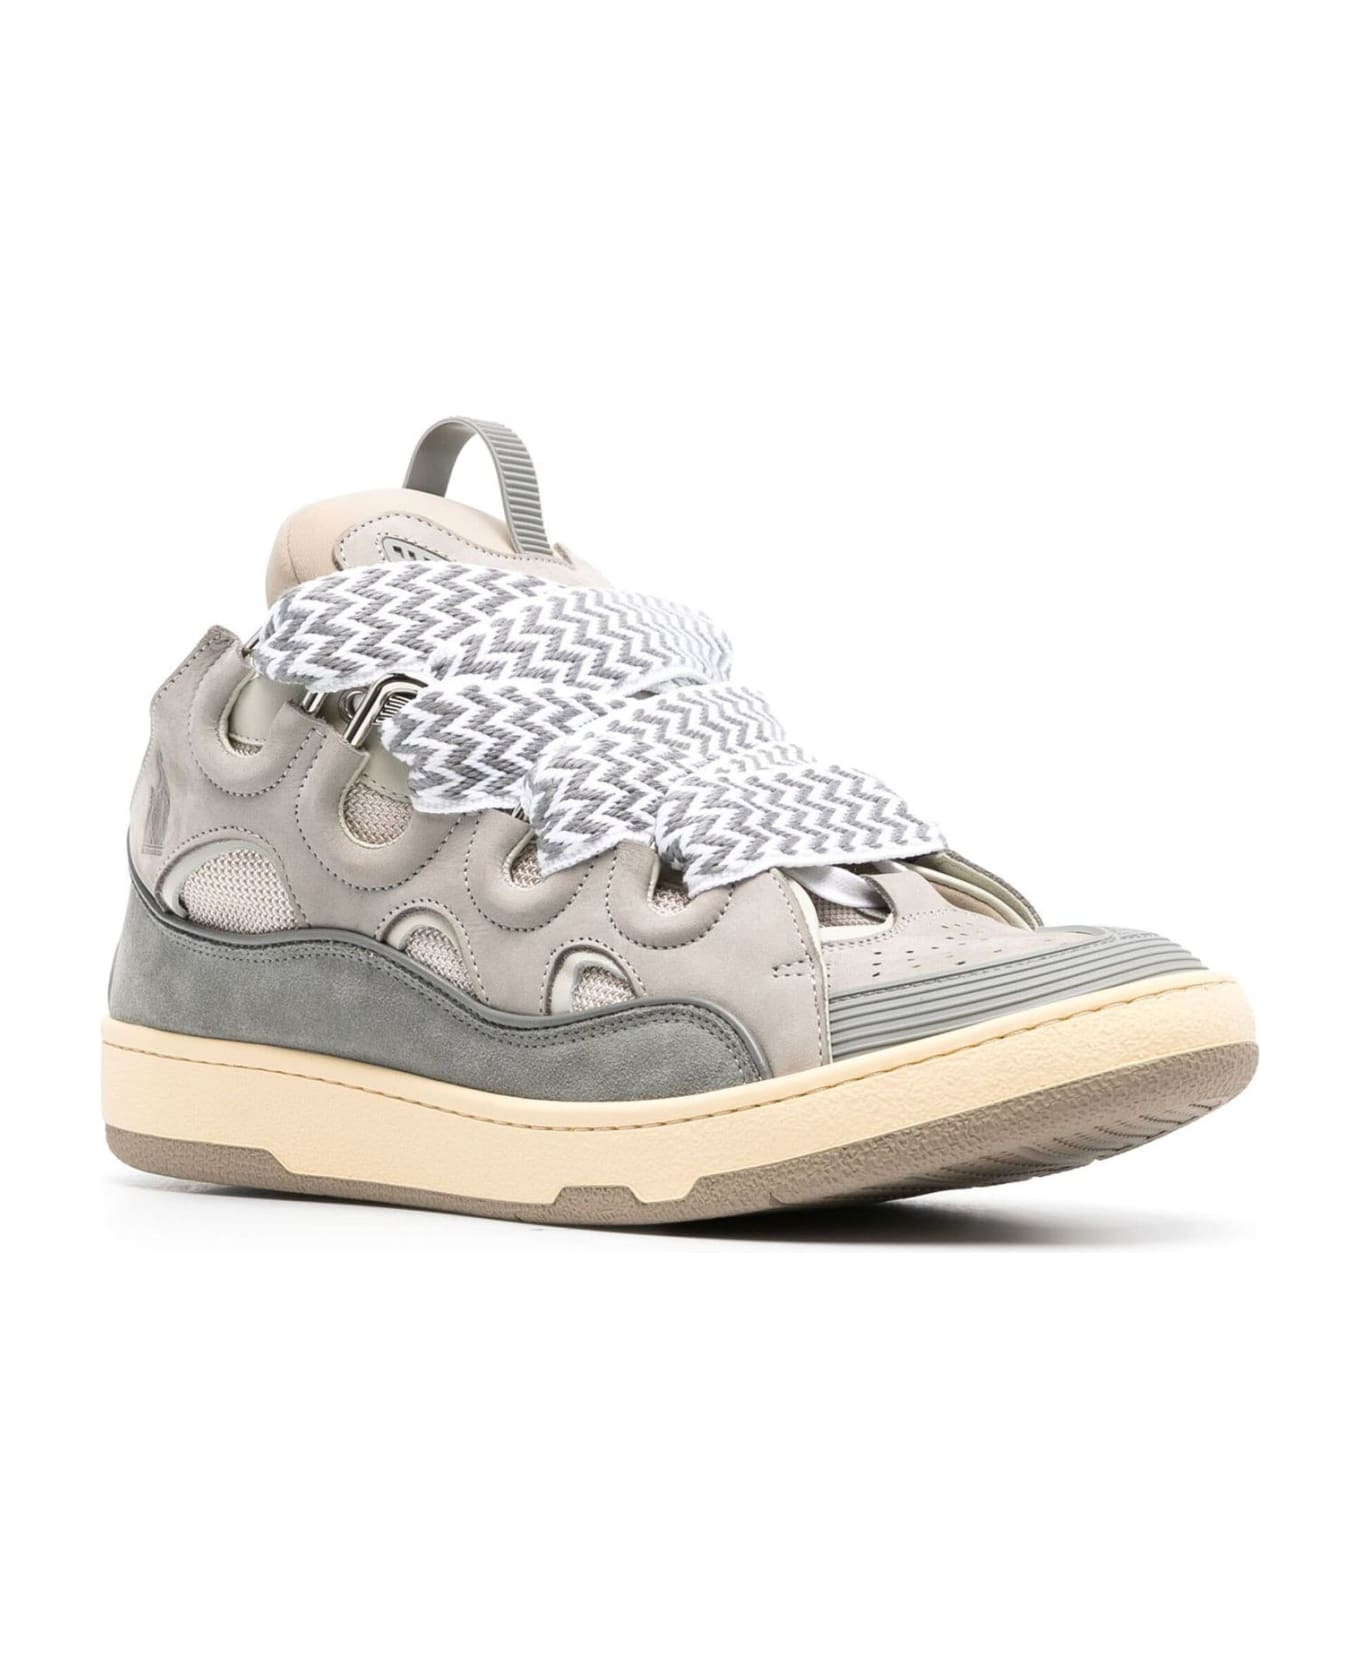 Lanvin Sneakers Grey - Grey